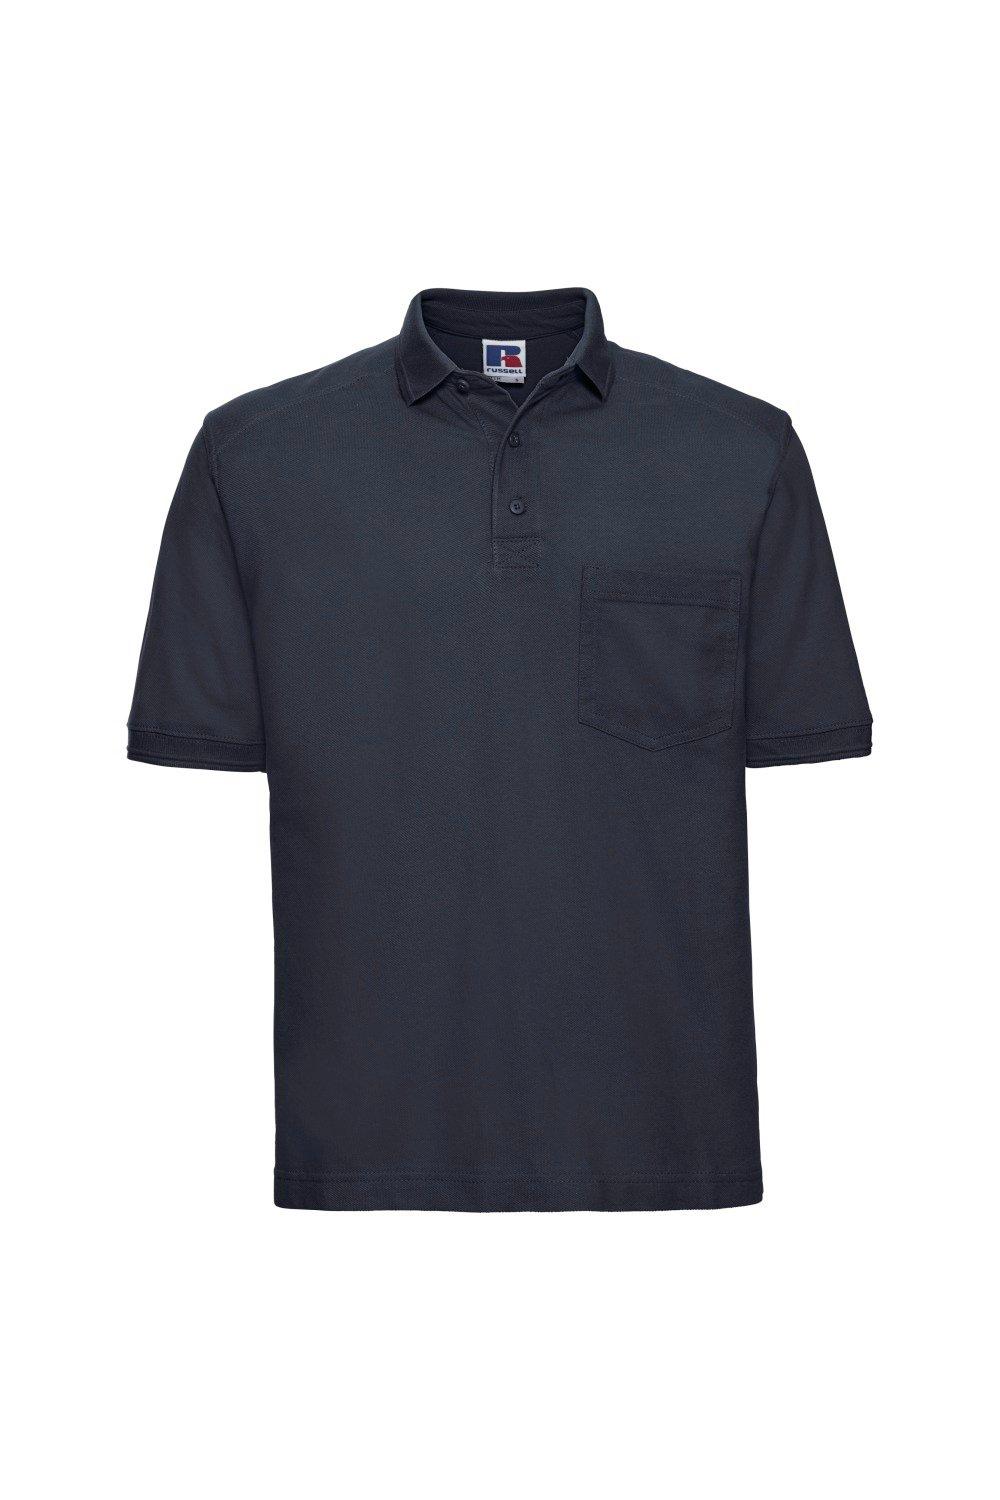 Рубашка поло с короткими рукавами и спецодеждой Russell, темно-синий рубашка поло ac